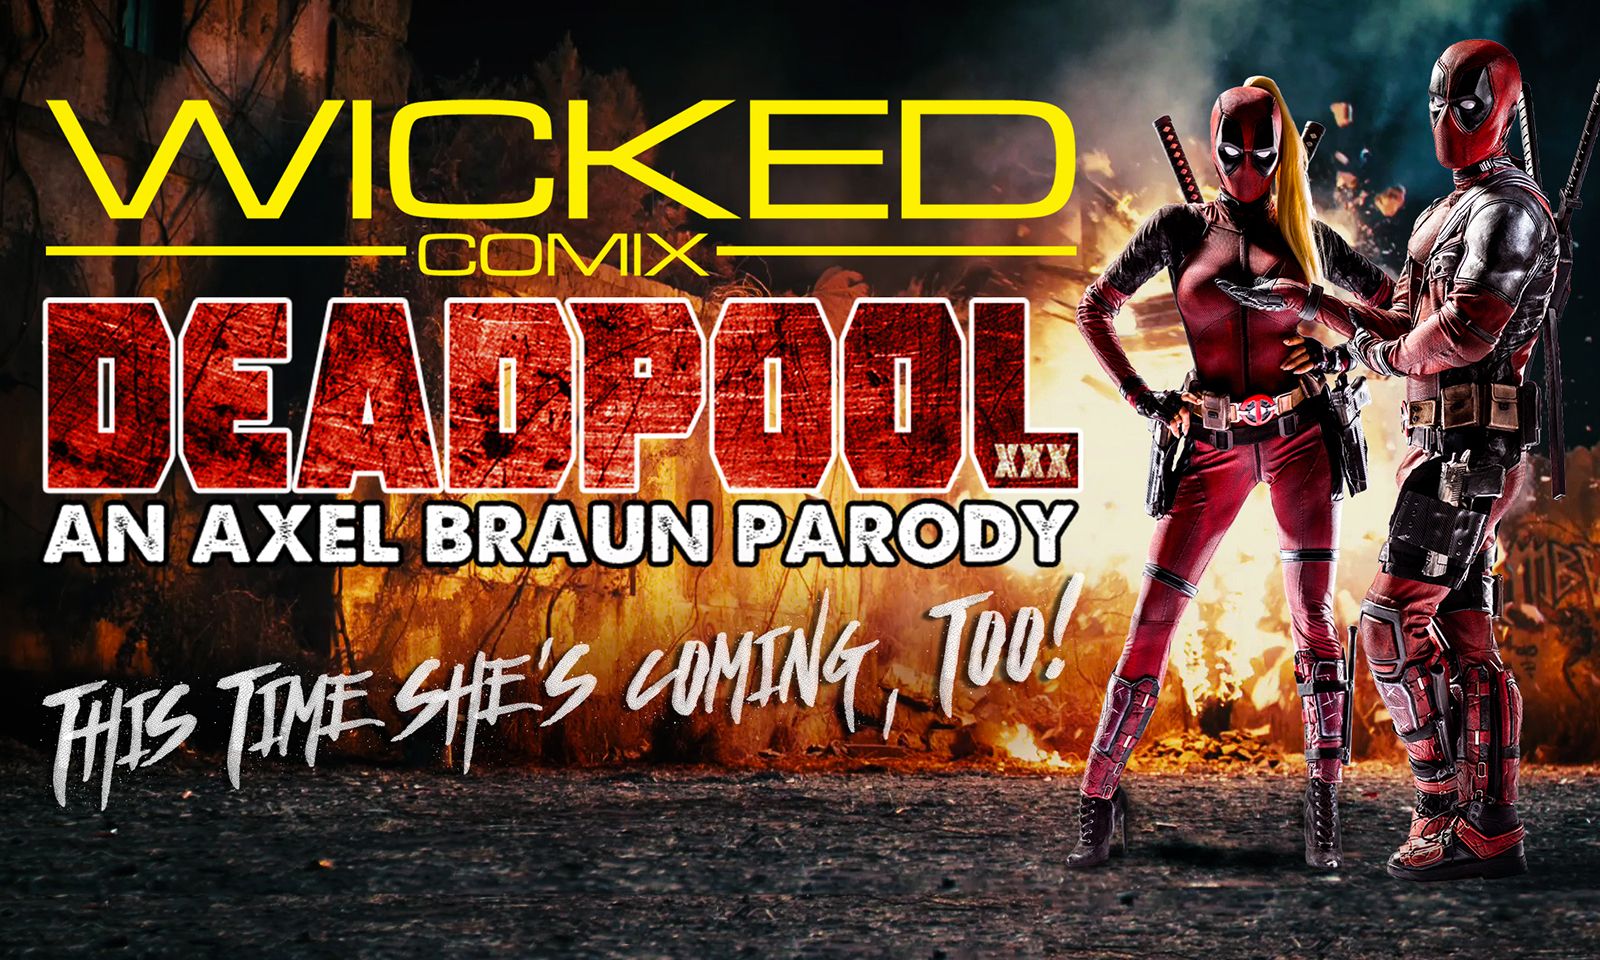 Deadpool xxx: an axel braun parody